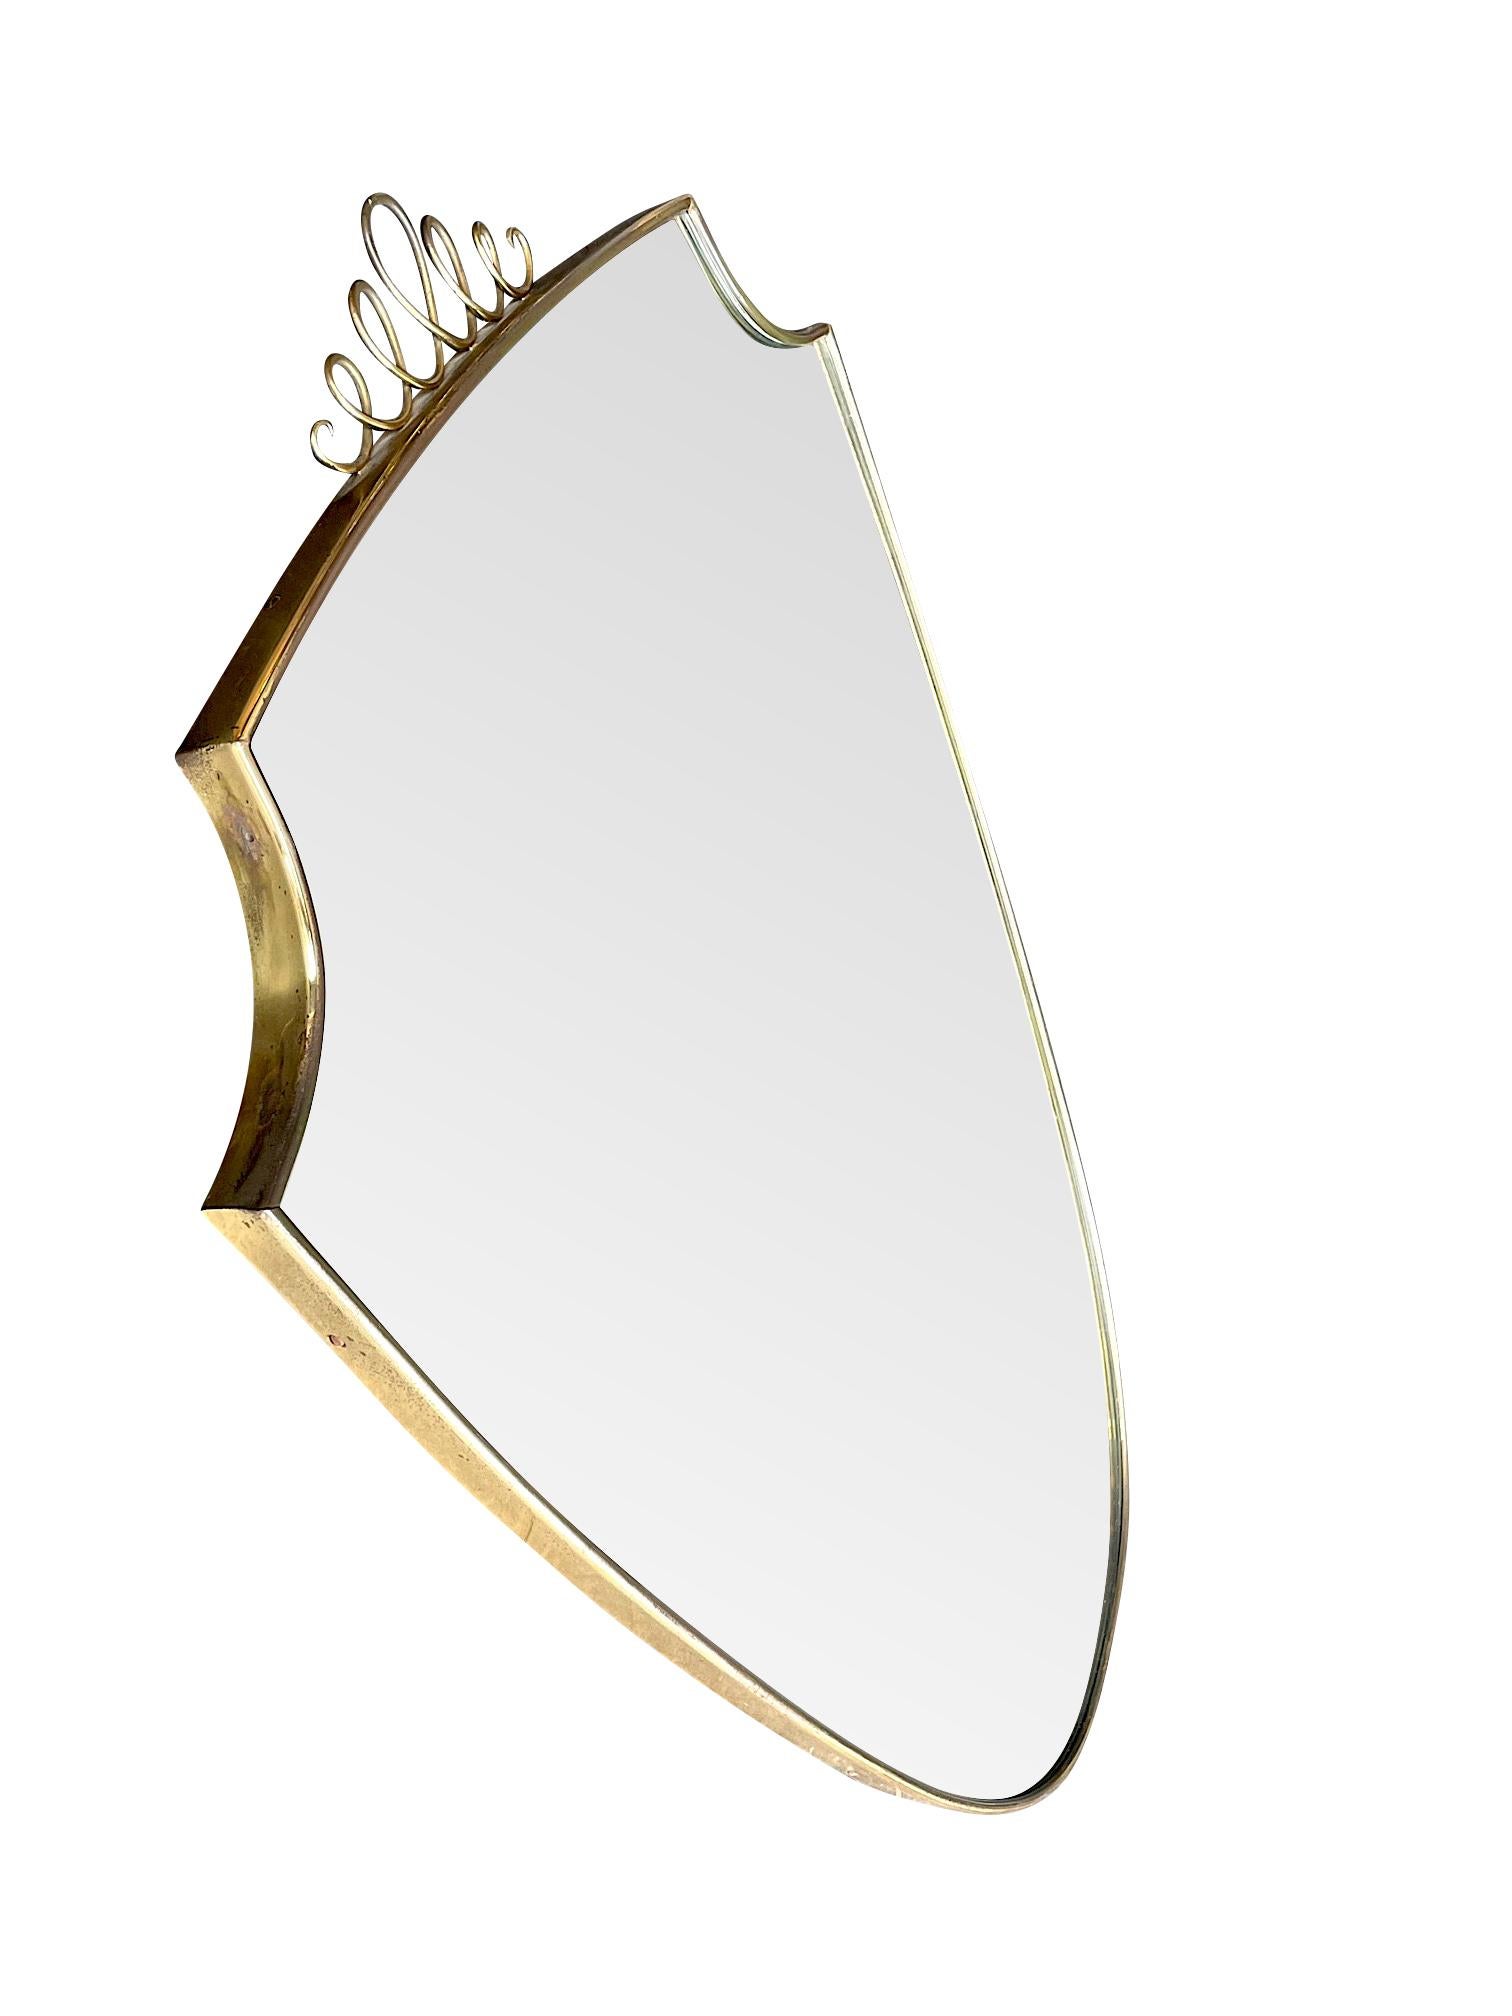 Mid-Century Modern Original 1950s Italian Brass Shield Mirror with Central Decorative Top Detail